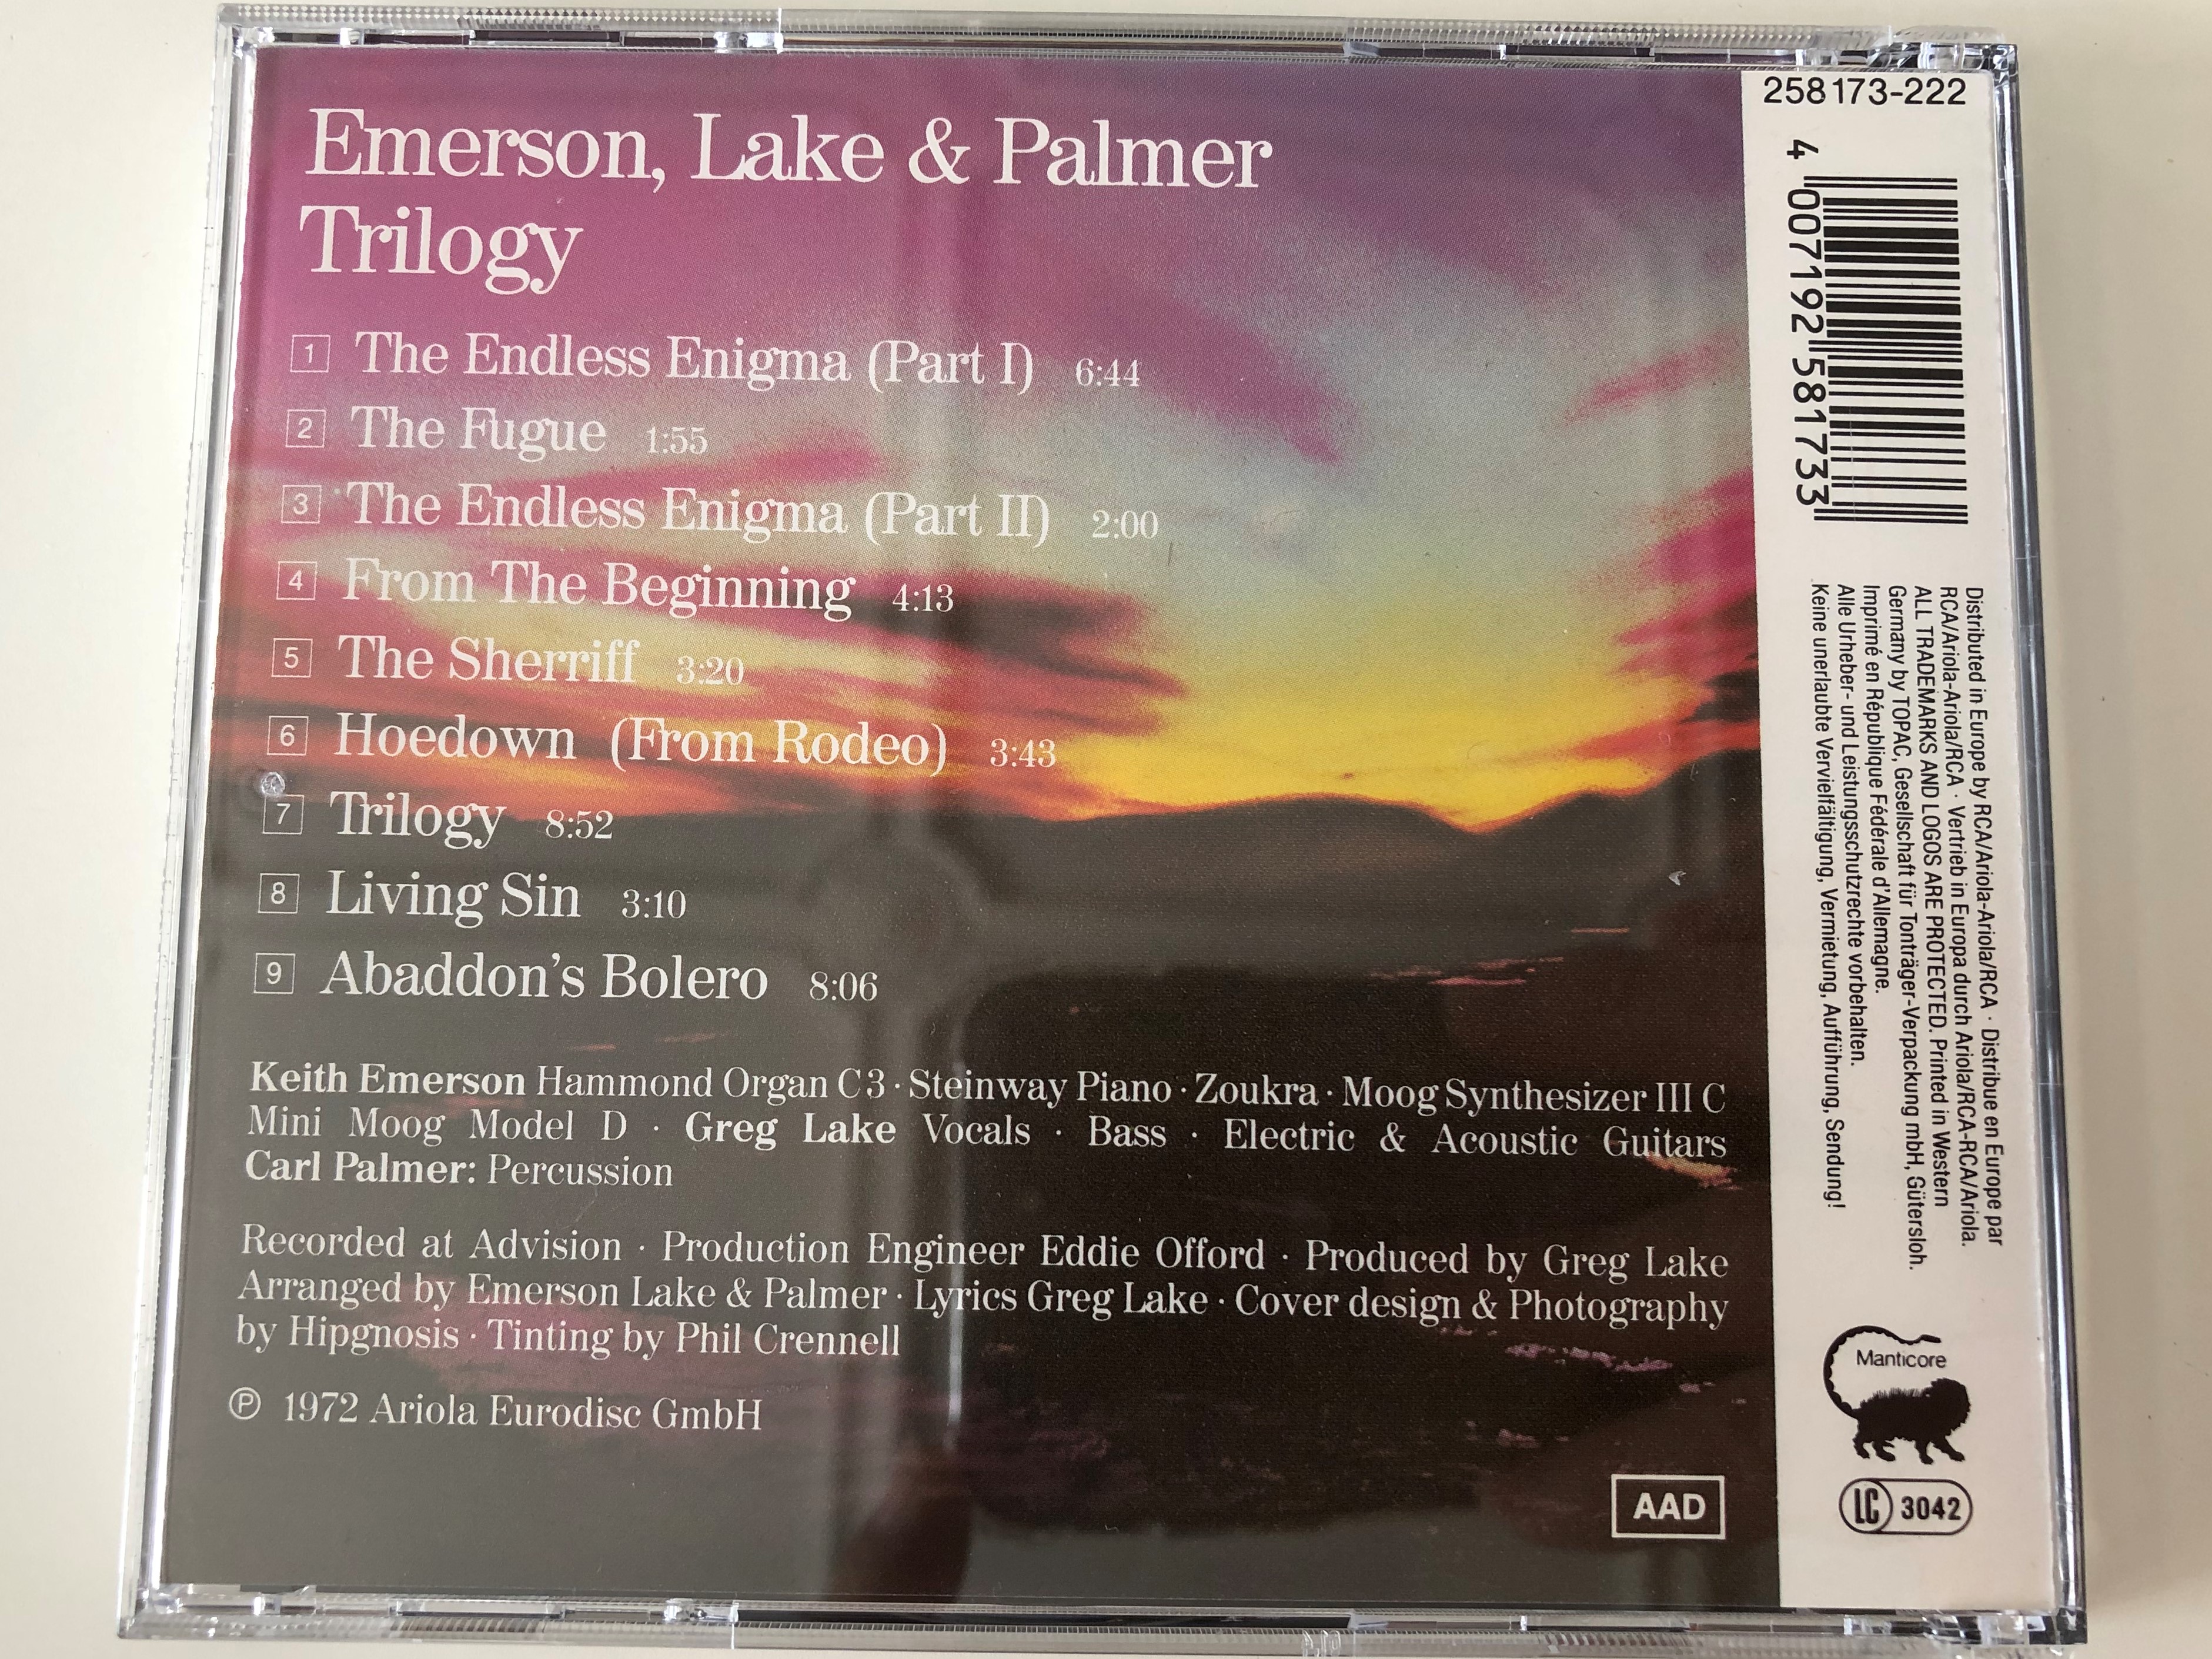 emerson-lake-palmer-trilogy-manticore-audio-cd-stereo-258-173-222-4-.jpg